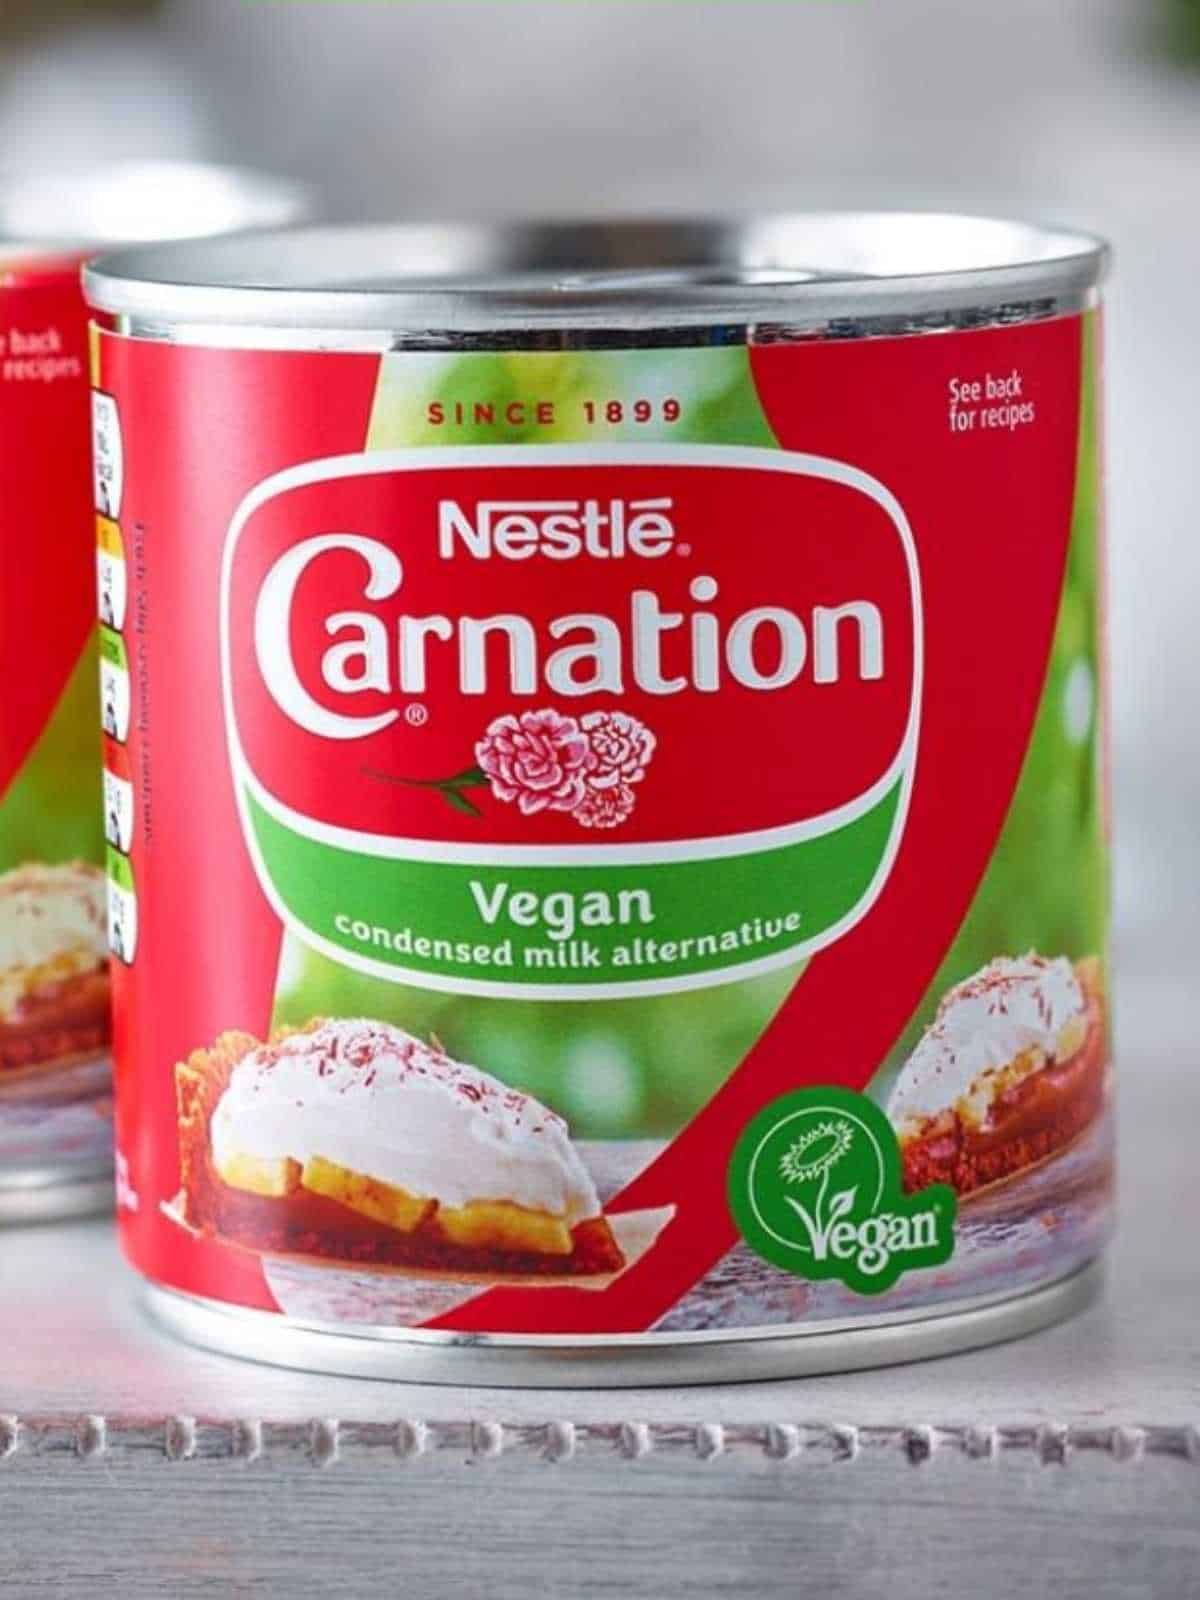 Can of Nestle Carnation Vegan Condensed Milk.